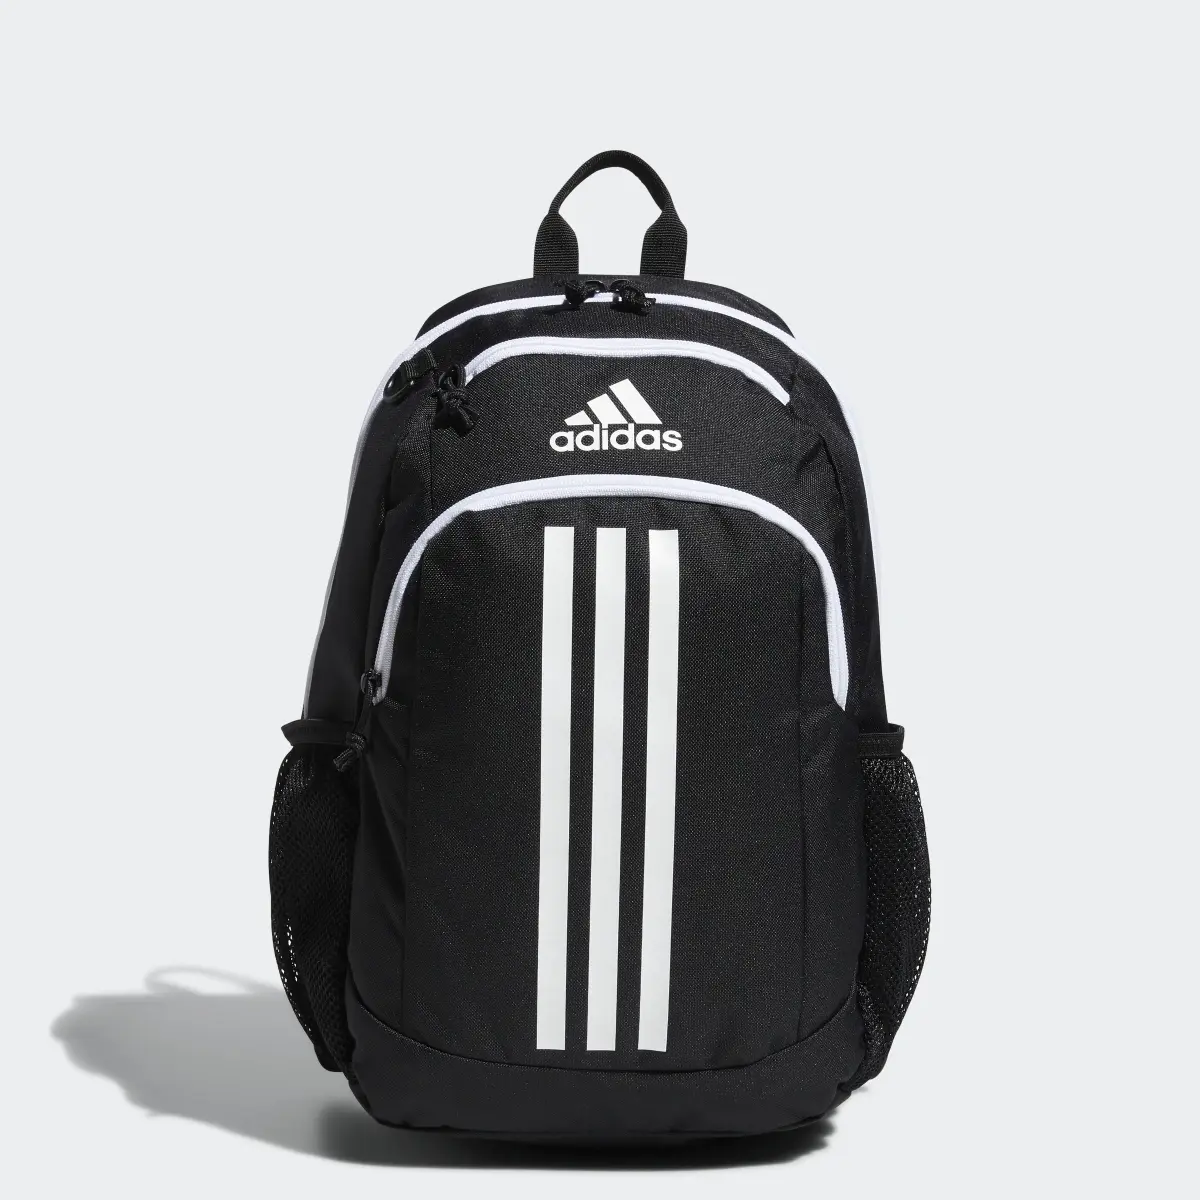 Adidas Creator Backpack. 1